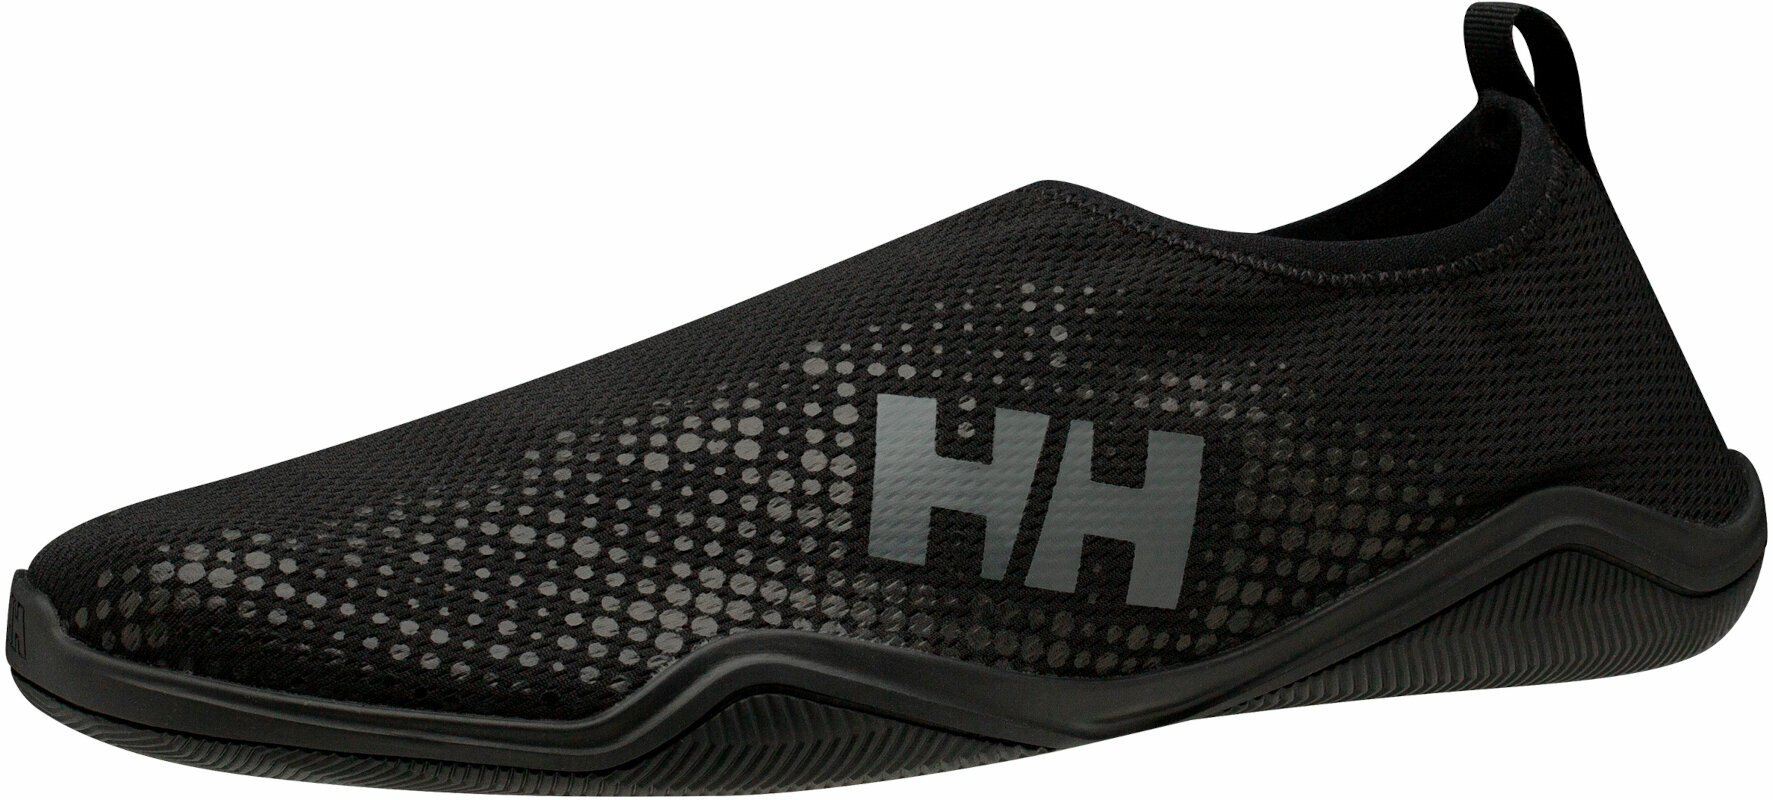 Mens Sailing Shoes Helly Hansen Men's Crest Watermoc Black/Charcoal 42